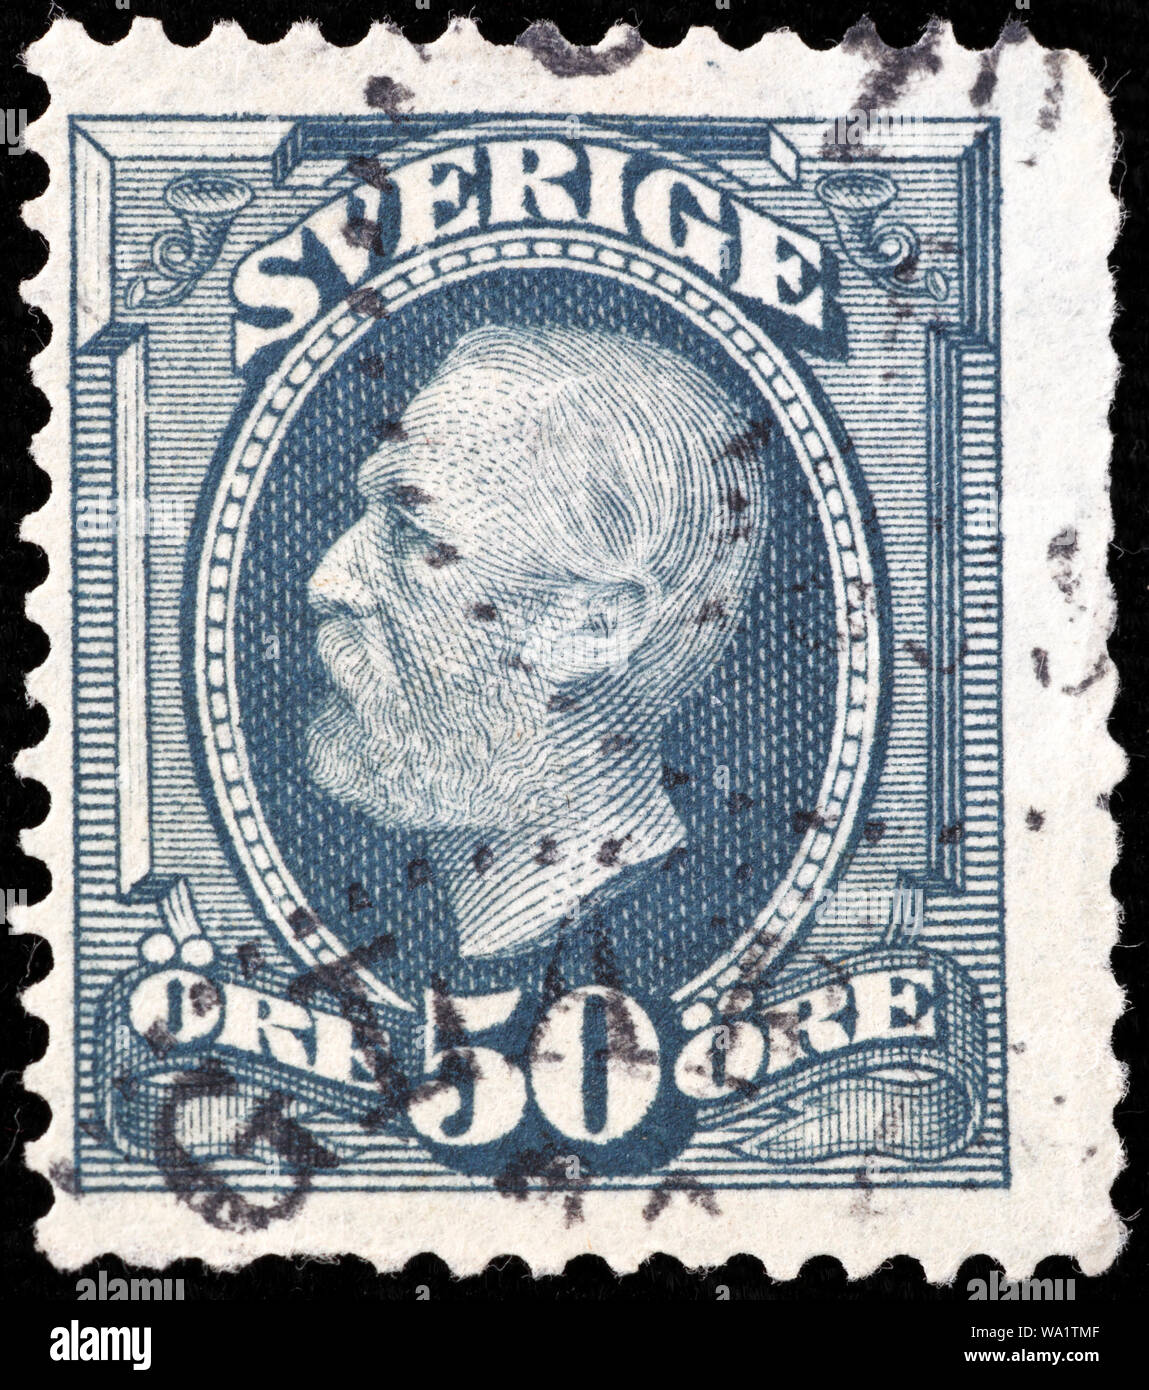 Oscar II, King of Sweden and Norway (1872-1907), postage stamp, Sweeden, 1898 Stock Photo